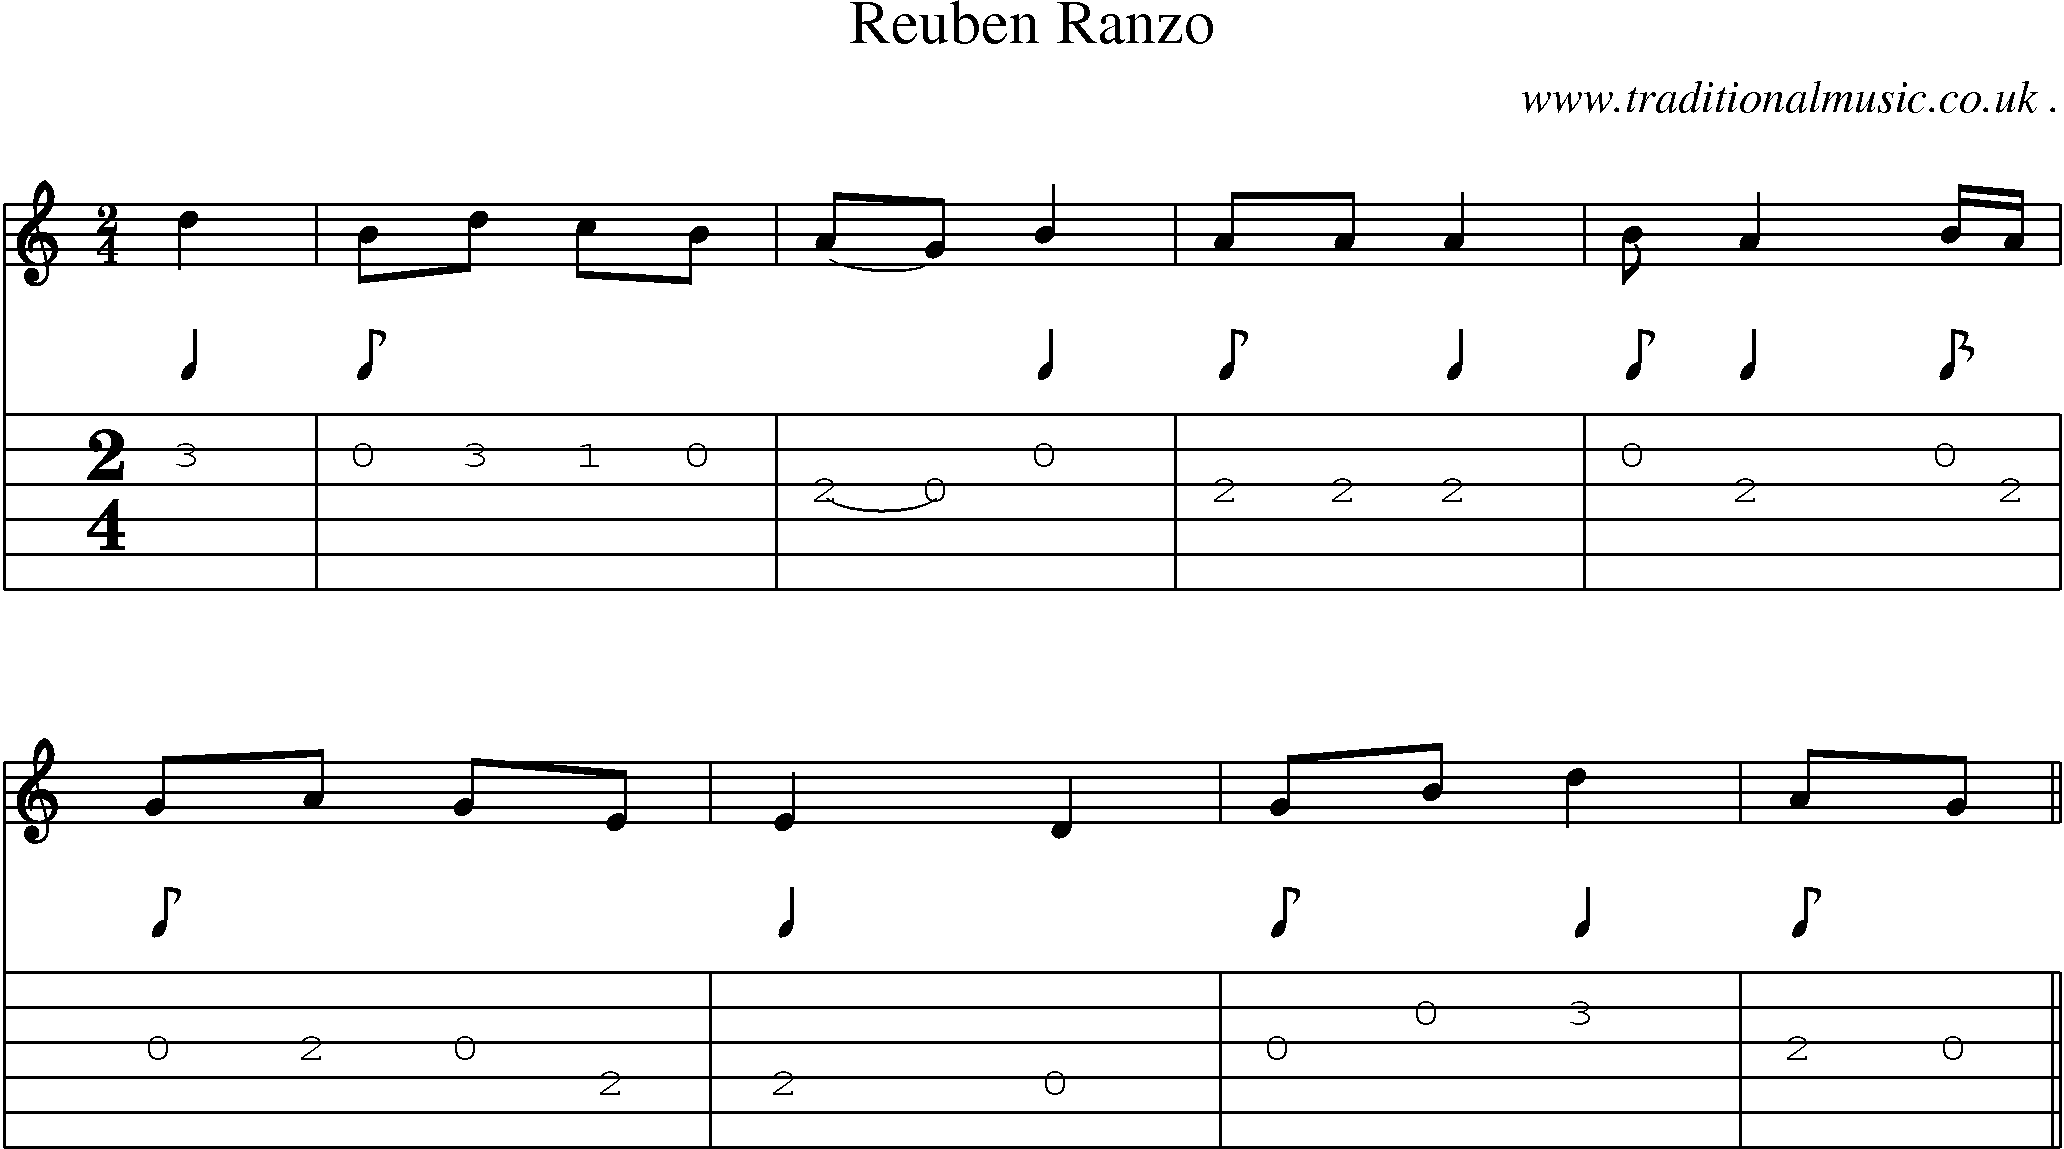 Sheet-Music and Guitar Tabs for Reuben Ranzo